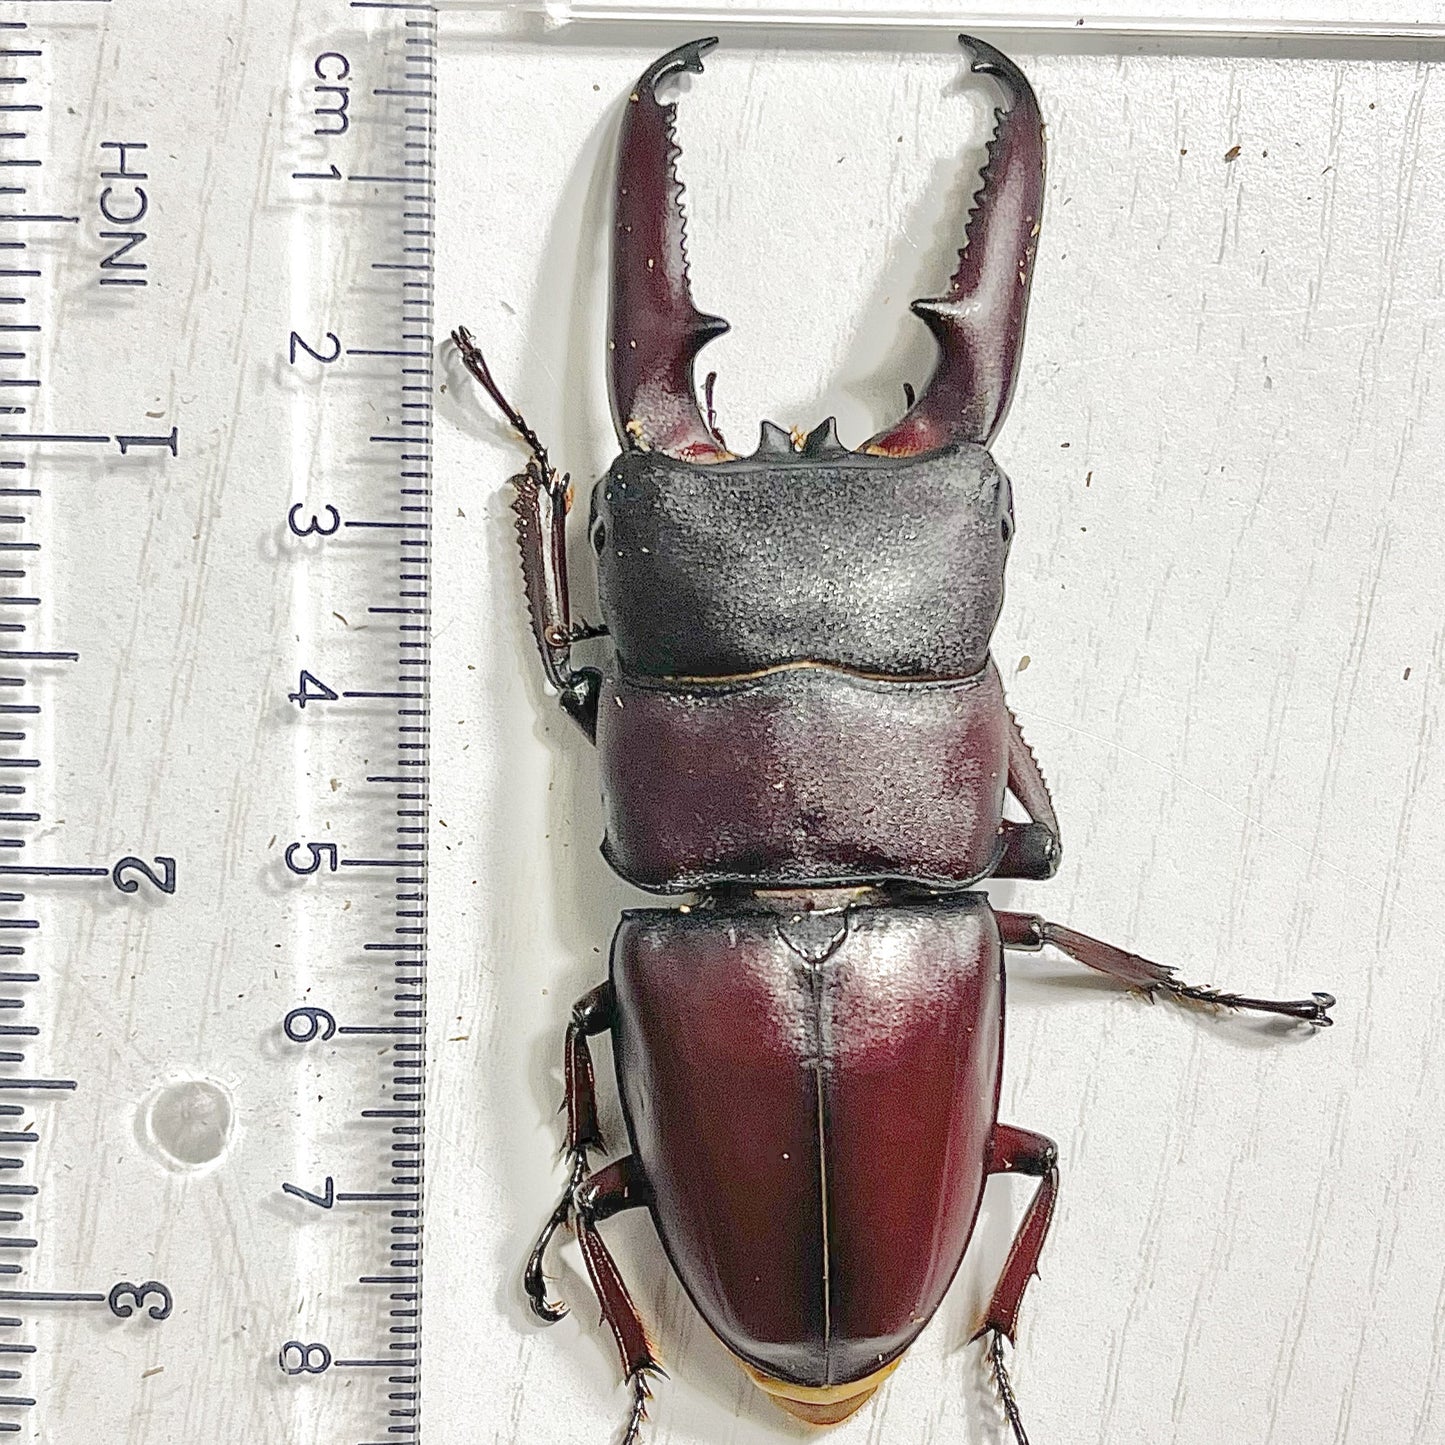 Dorcus Titanus castanicolor (Long-Jawed Black Stag Beetle)